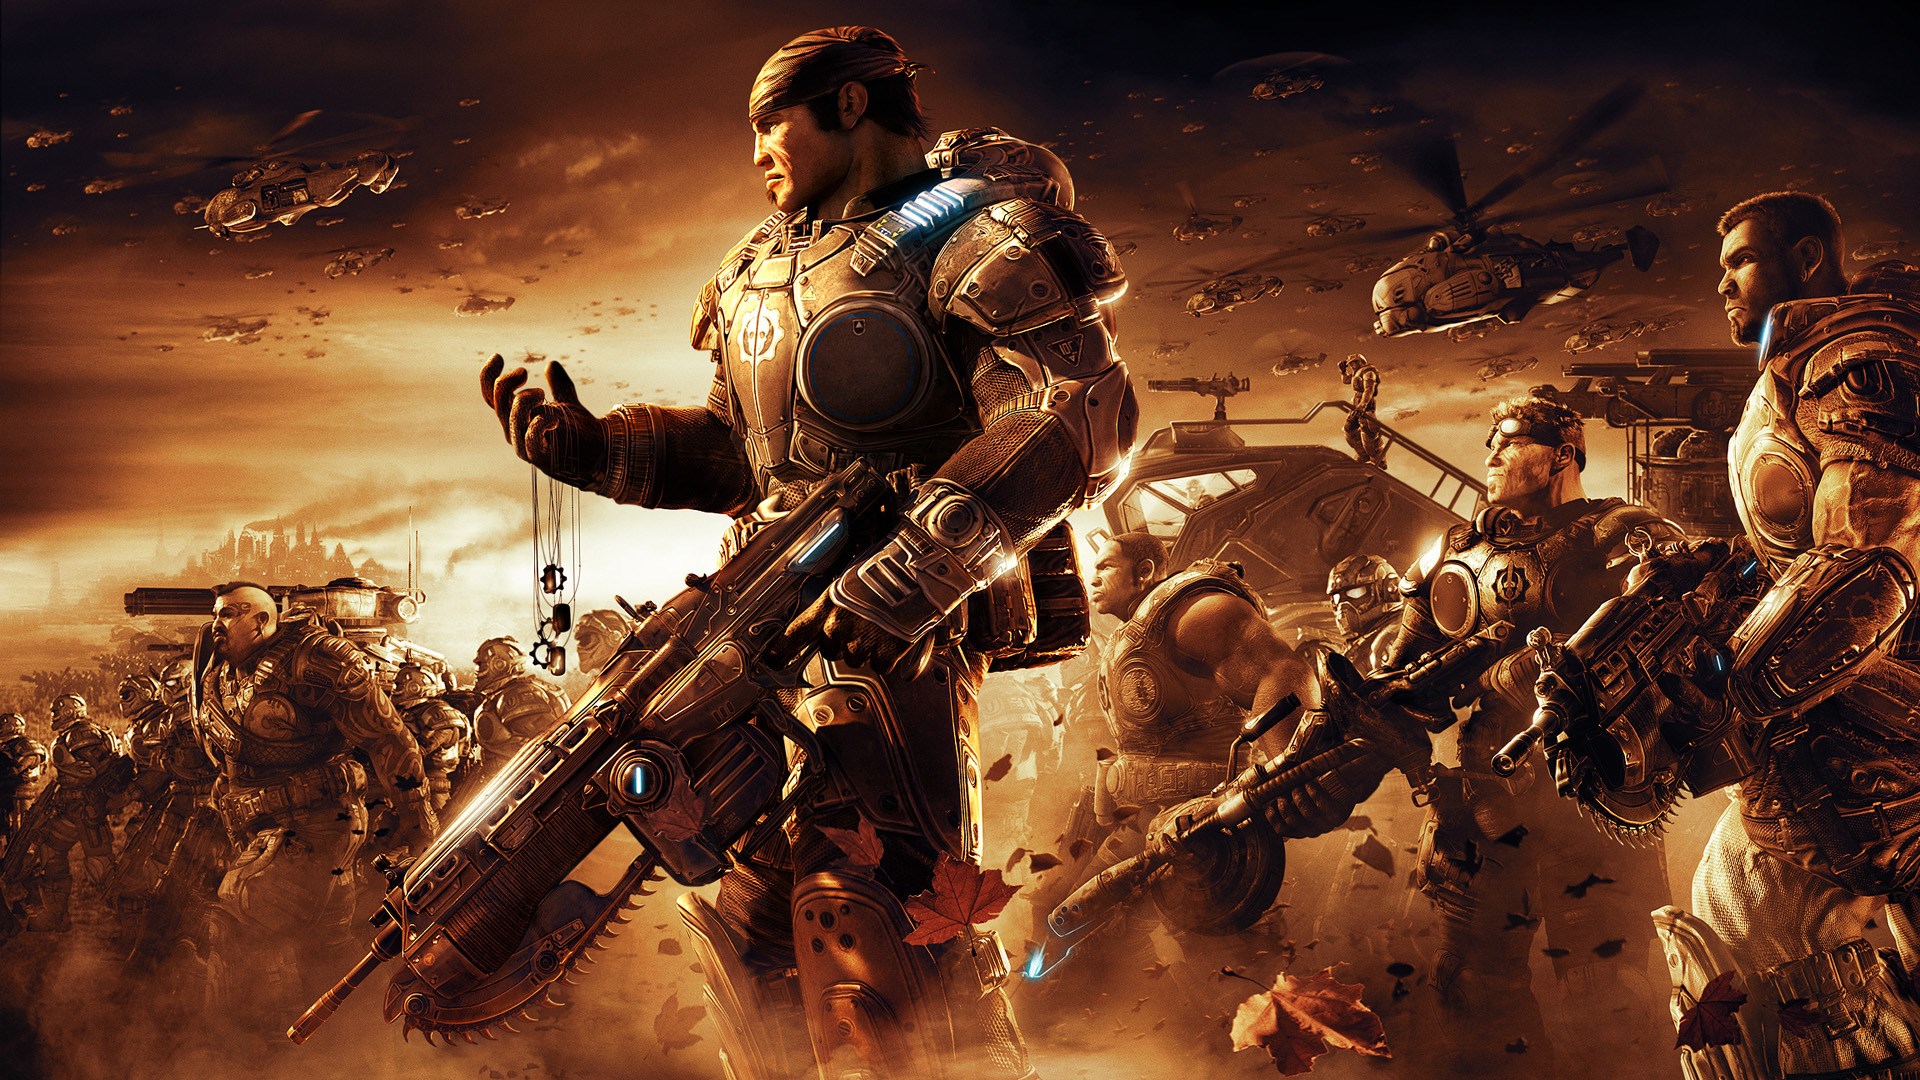 Gears of War 2 Review